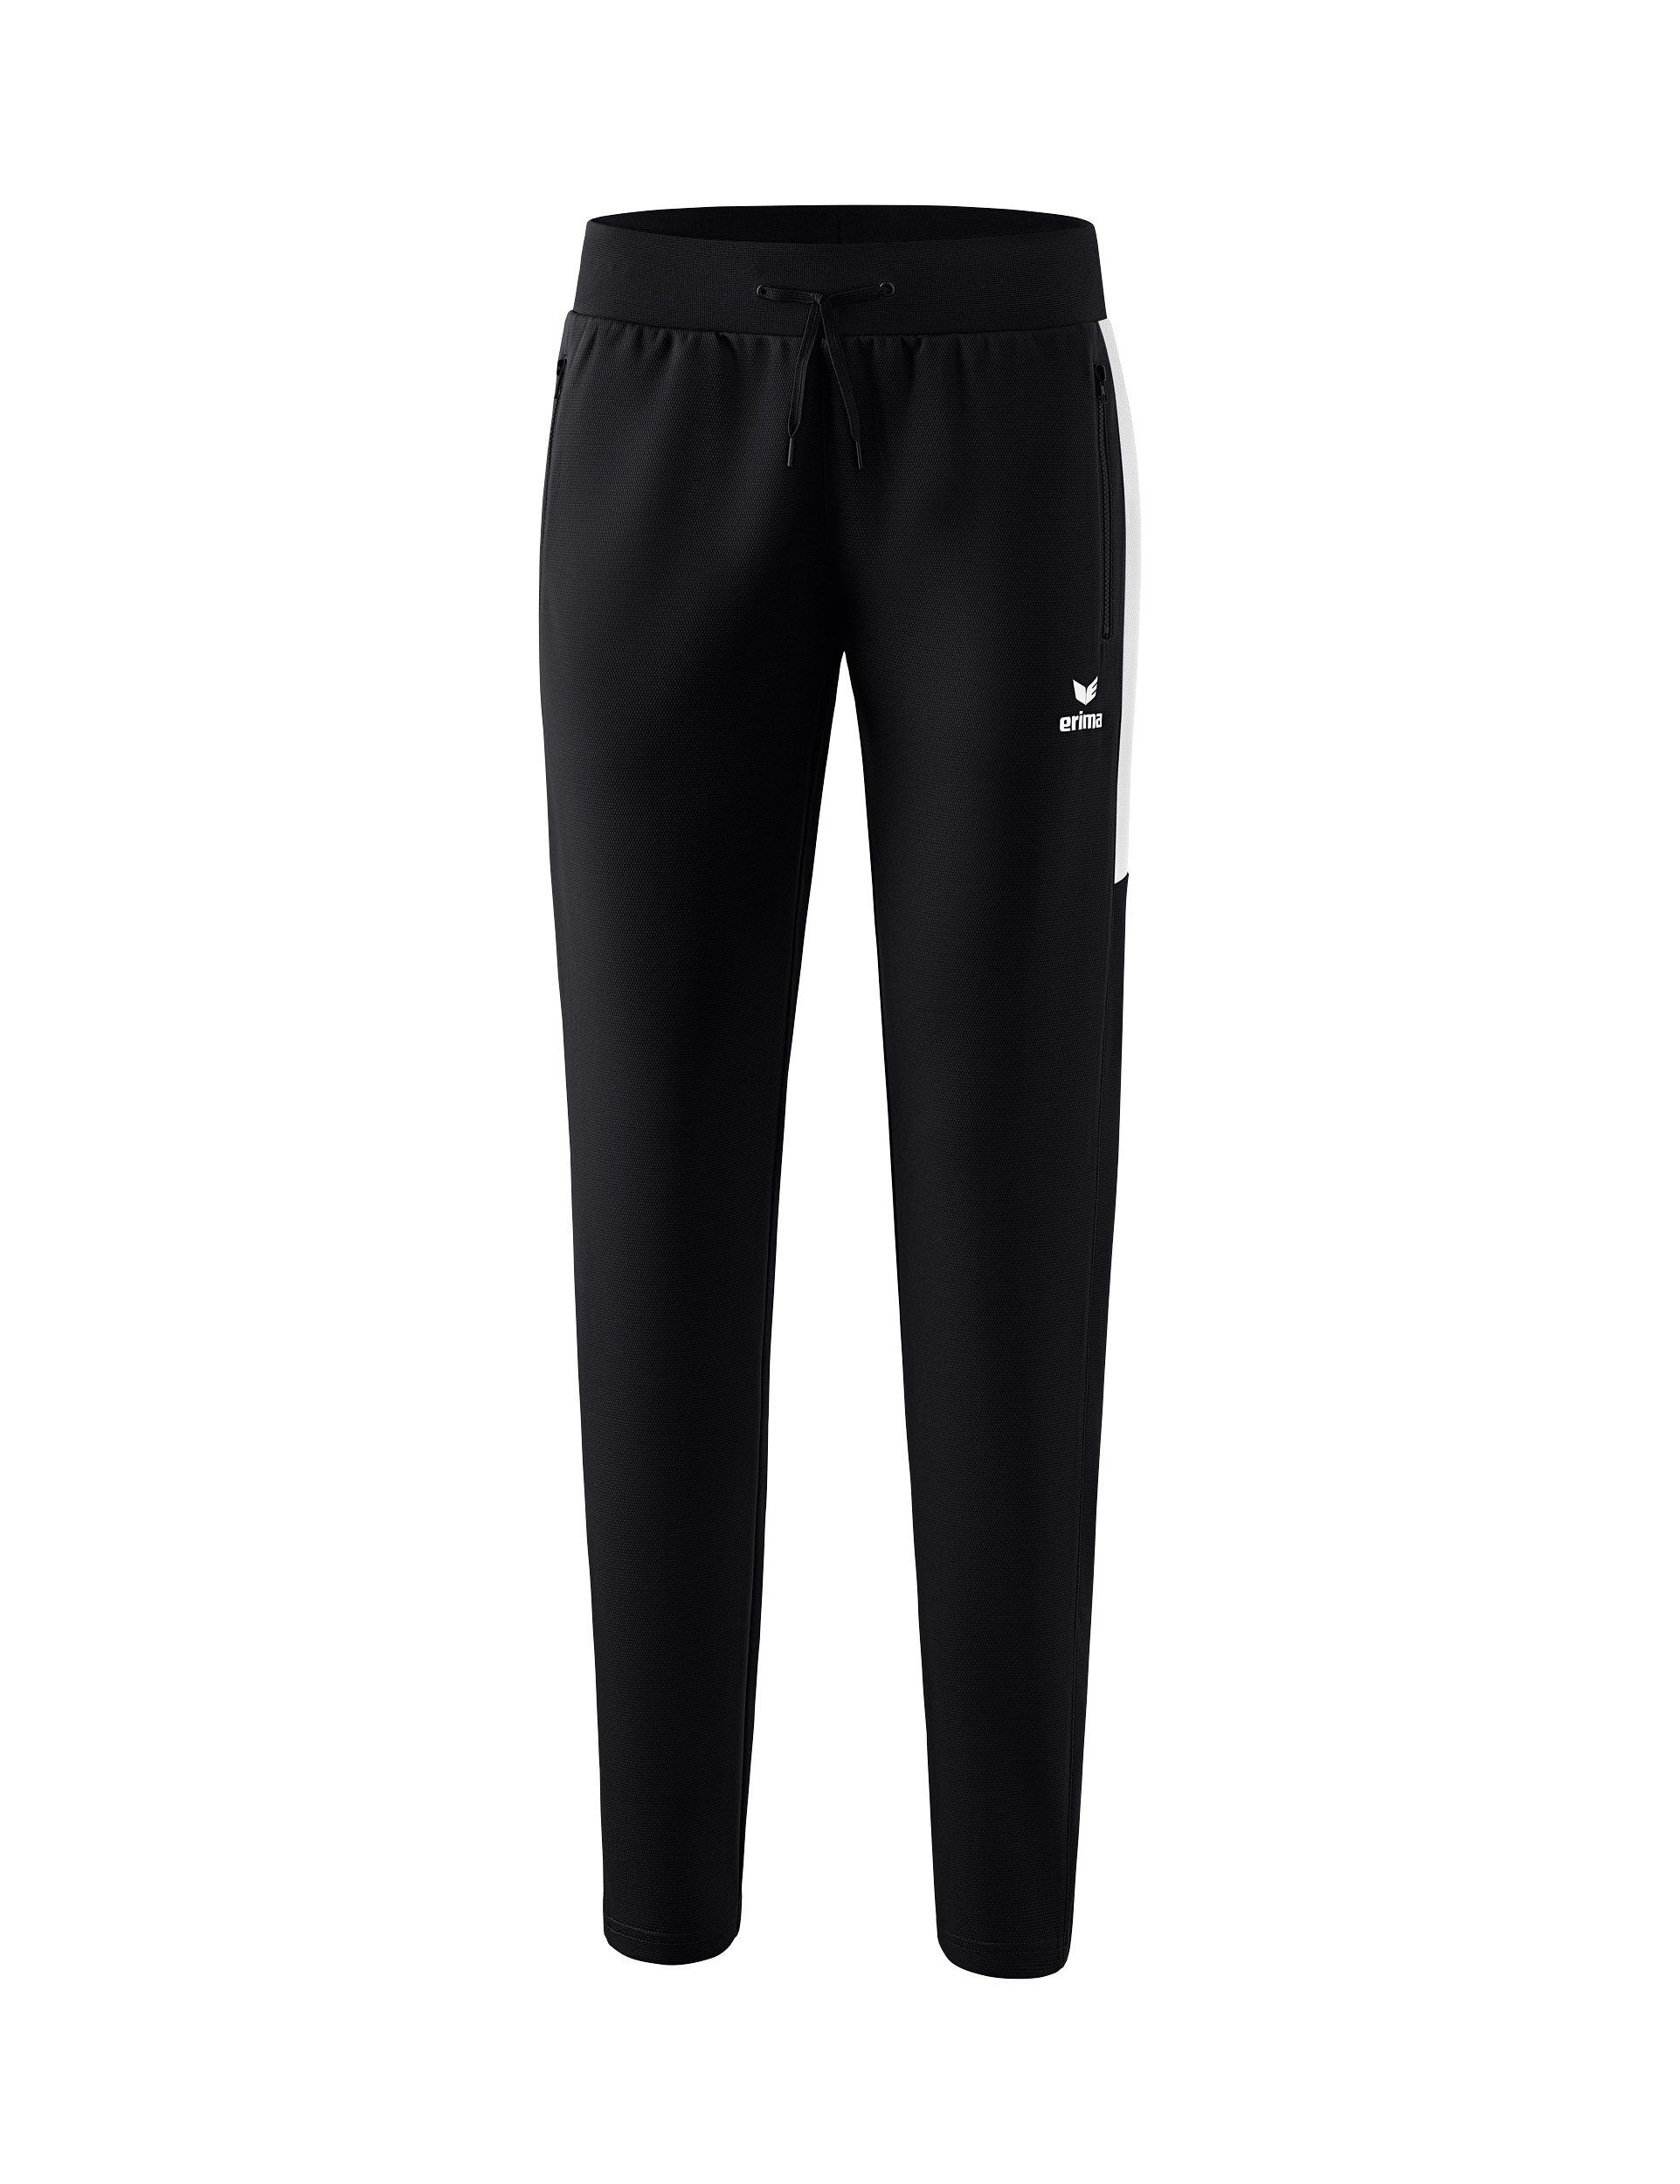 Erima Jogginghose SQUAD training pants black/white schwarzweiss